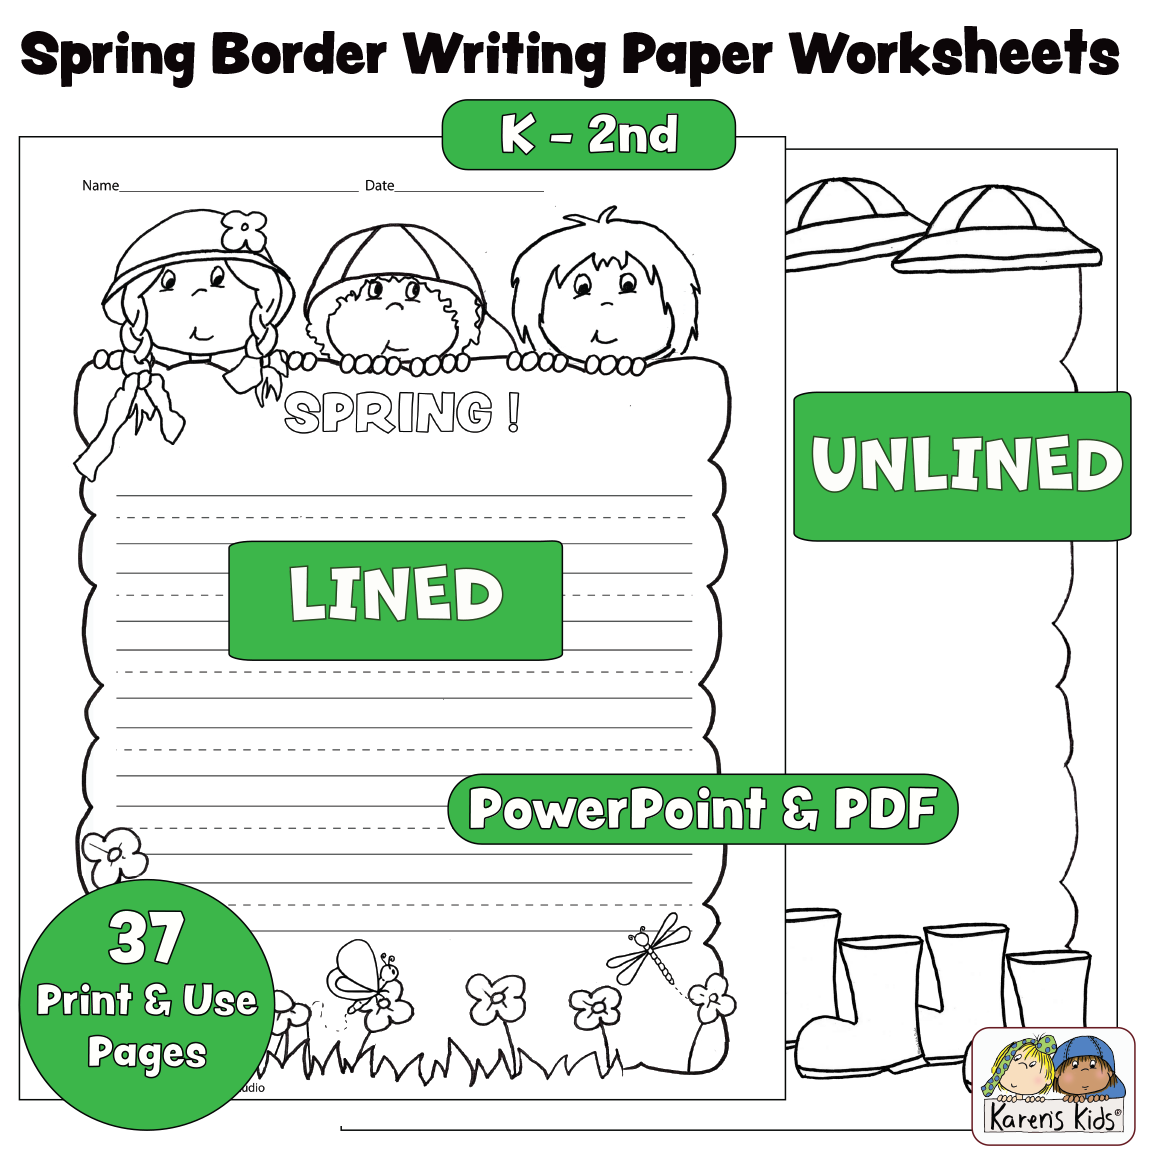 Spring Writing Paper W/WO Lines K-2nd) (Karen's Kids Printables)